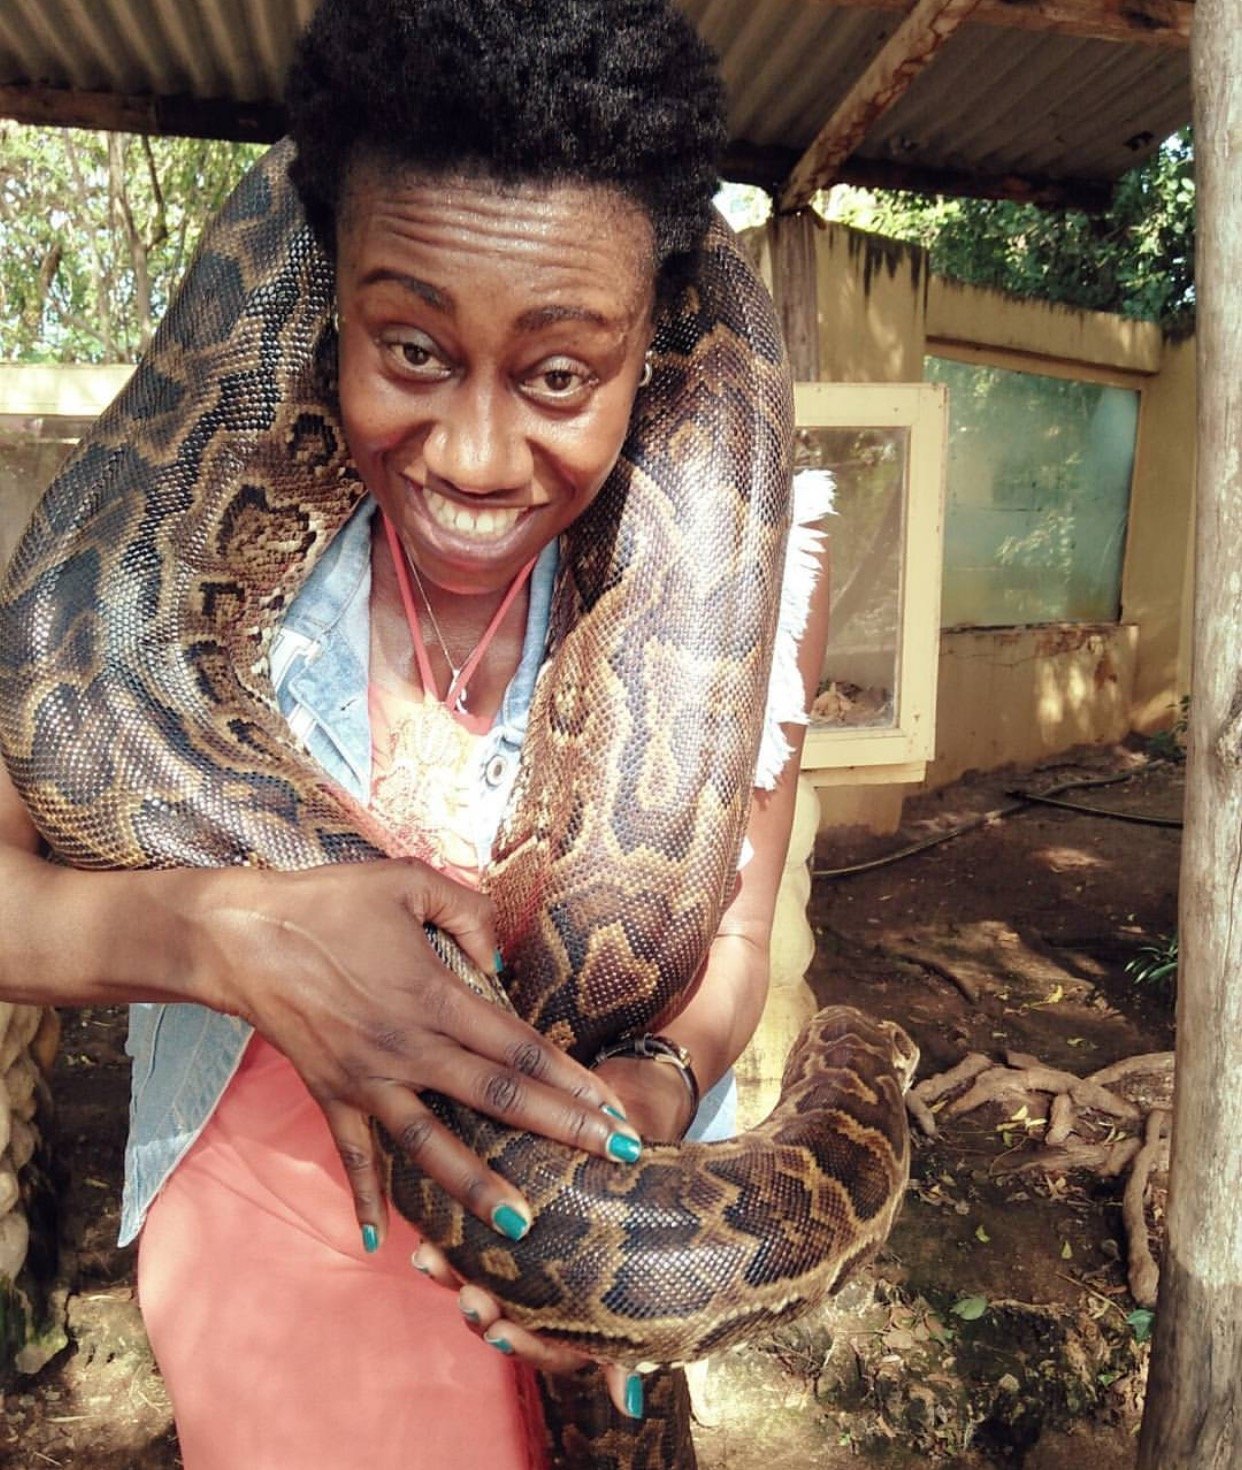 Papa Shirandula’s wife photographed carrying a huge snake, leaves fans talking!